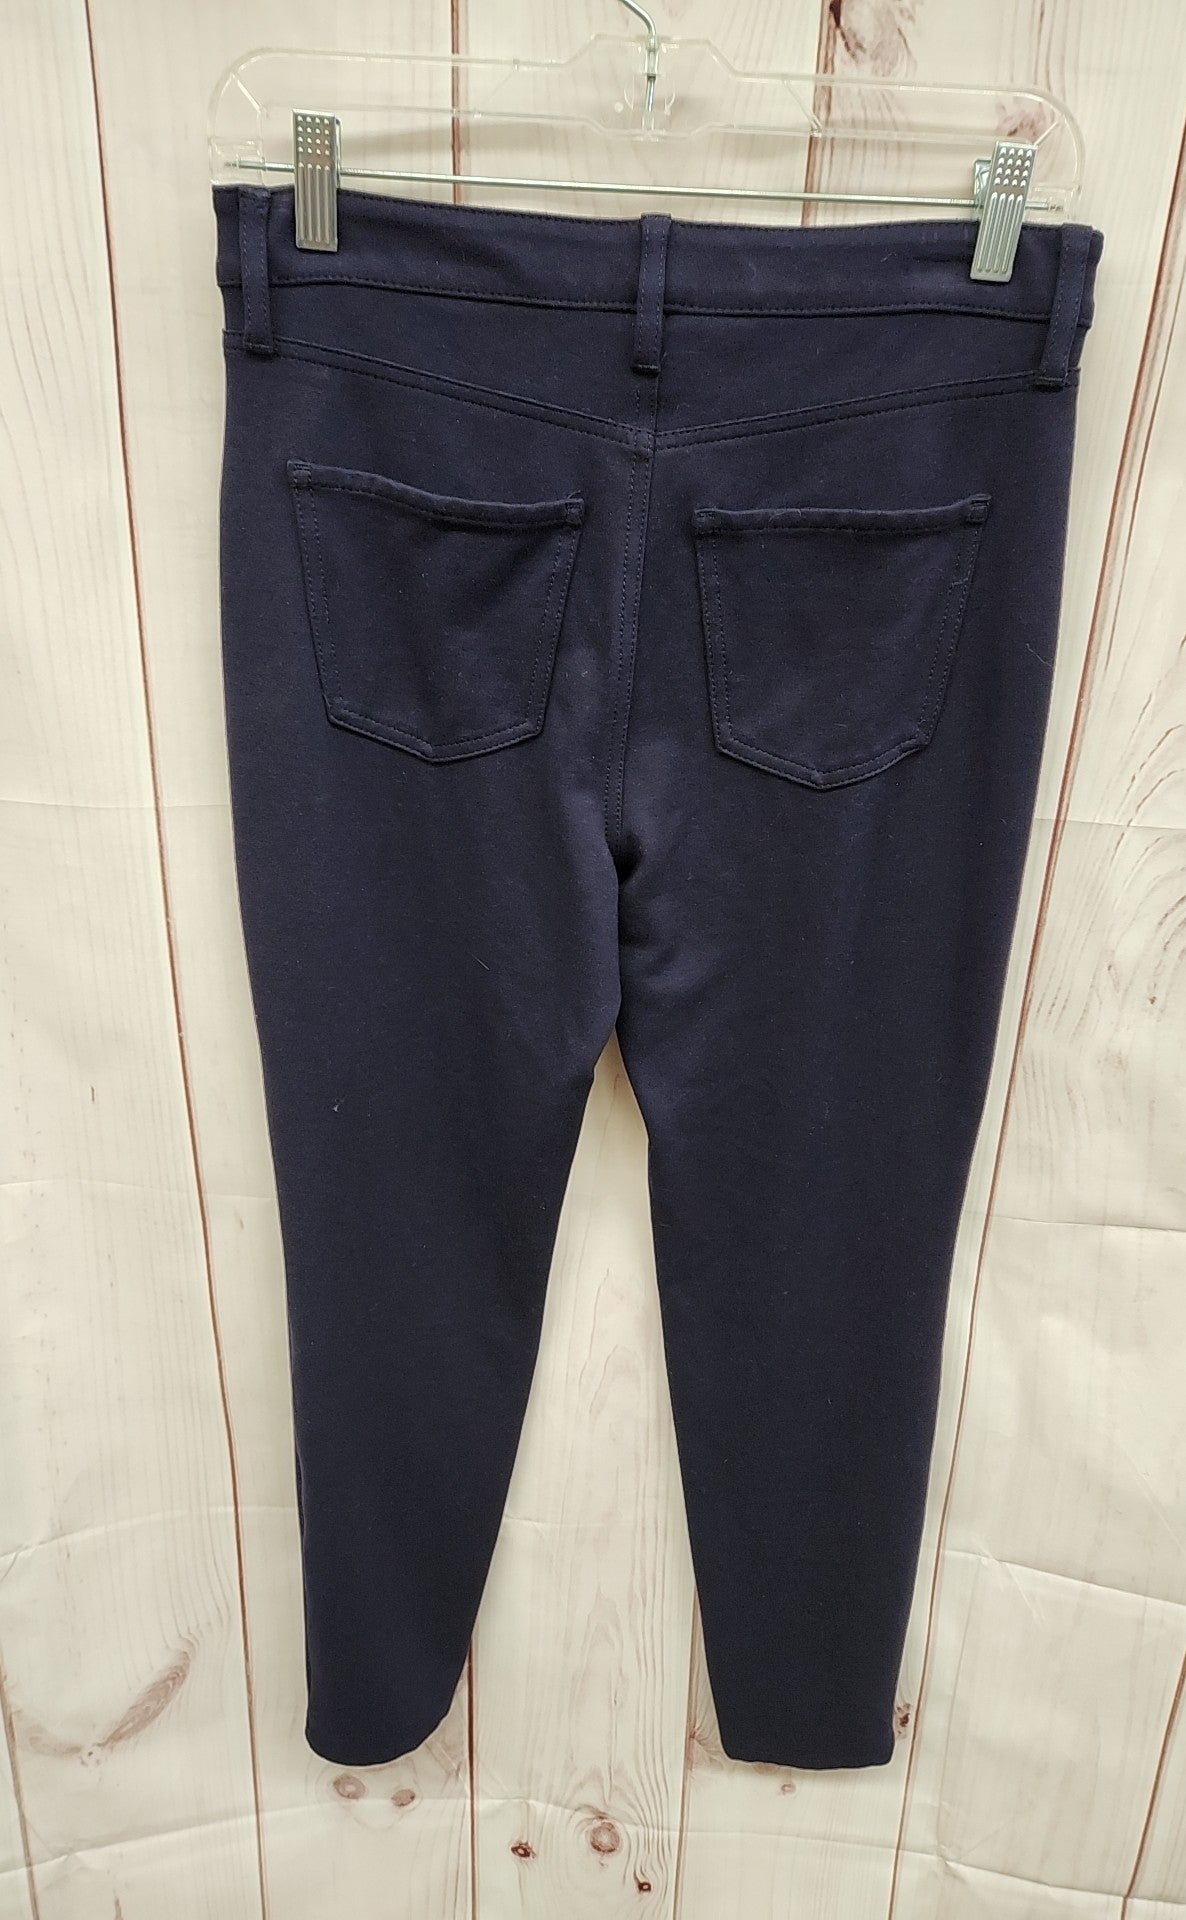 Talbots Women's Size 4 Petite Navy Pants